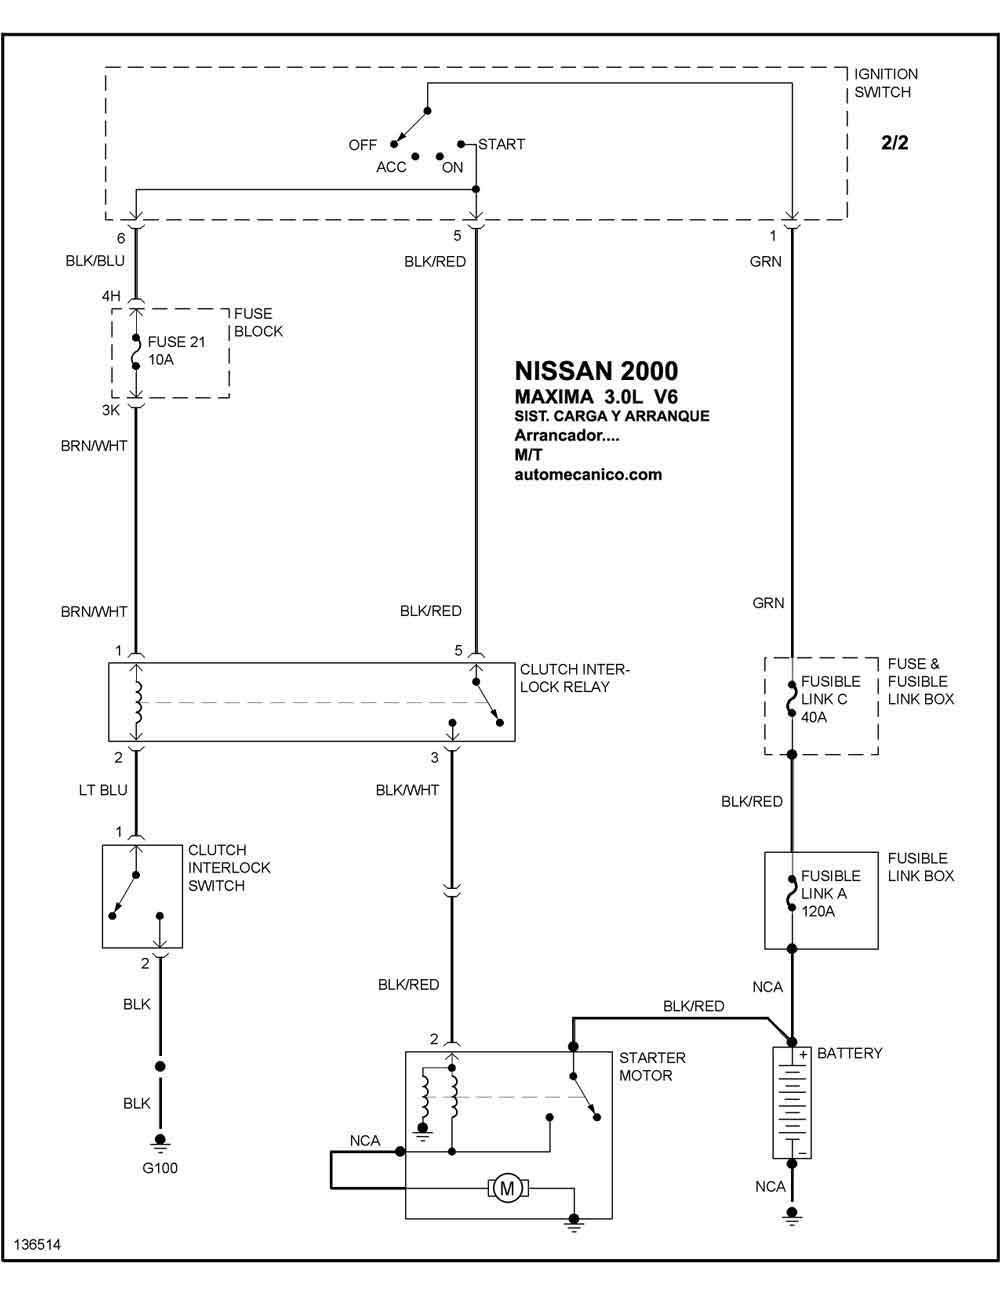 Diagrama electrico nissan maxima 2000 #2